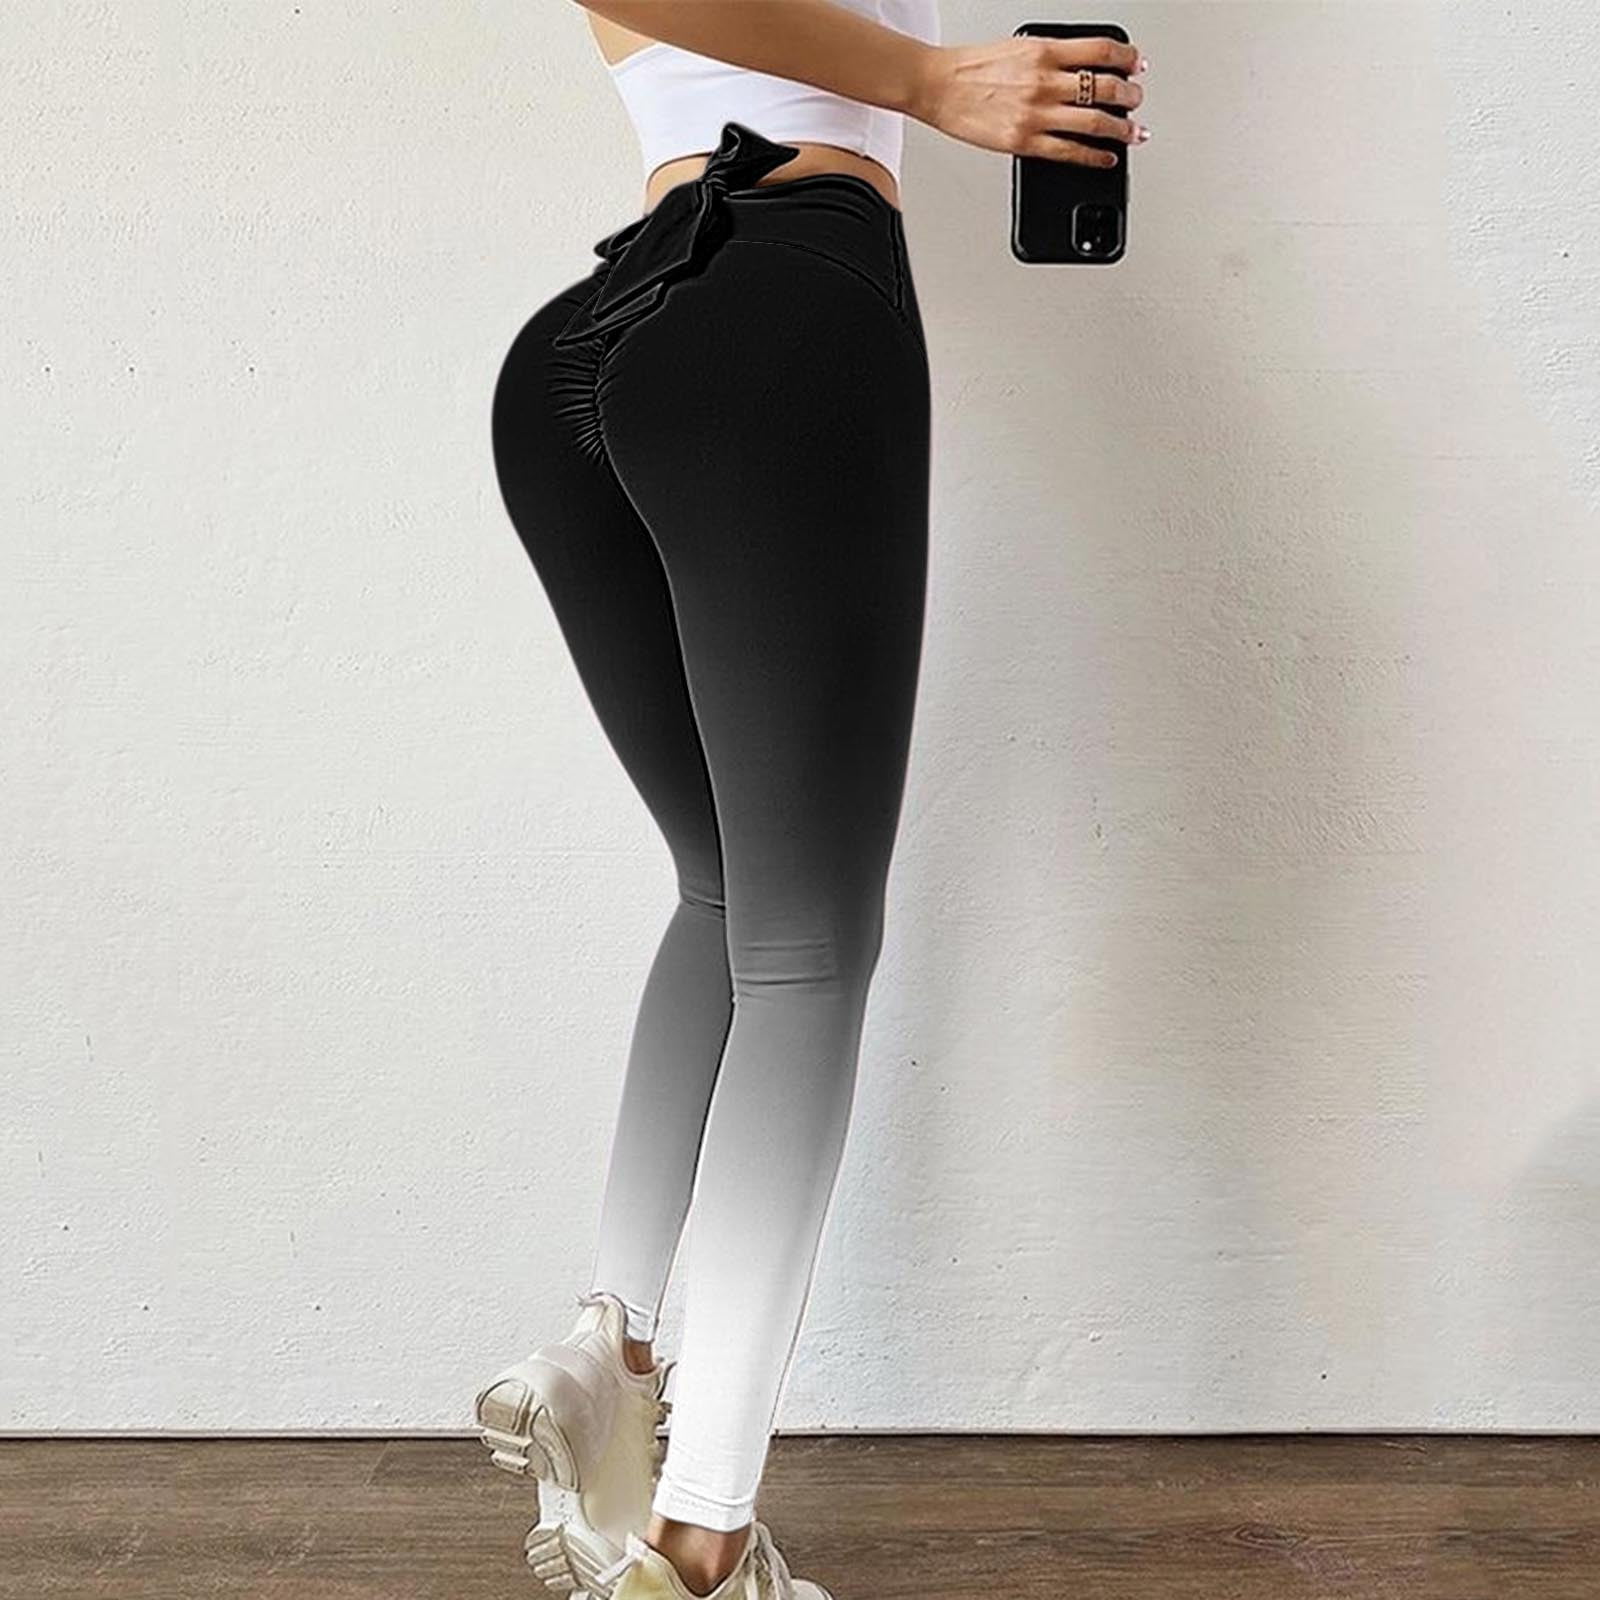 Aayomet Yoga Pants Women's Split Exercise Stretch High Solid Pants Color  Yoga Running Leisure Pants,Black L 